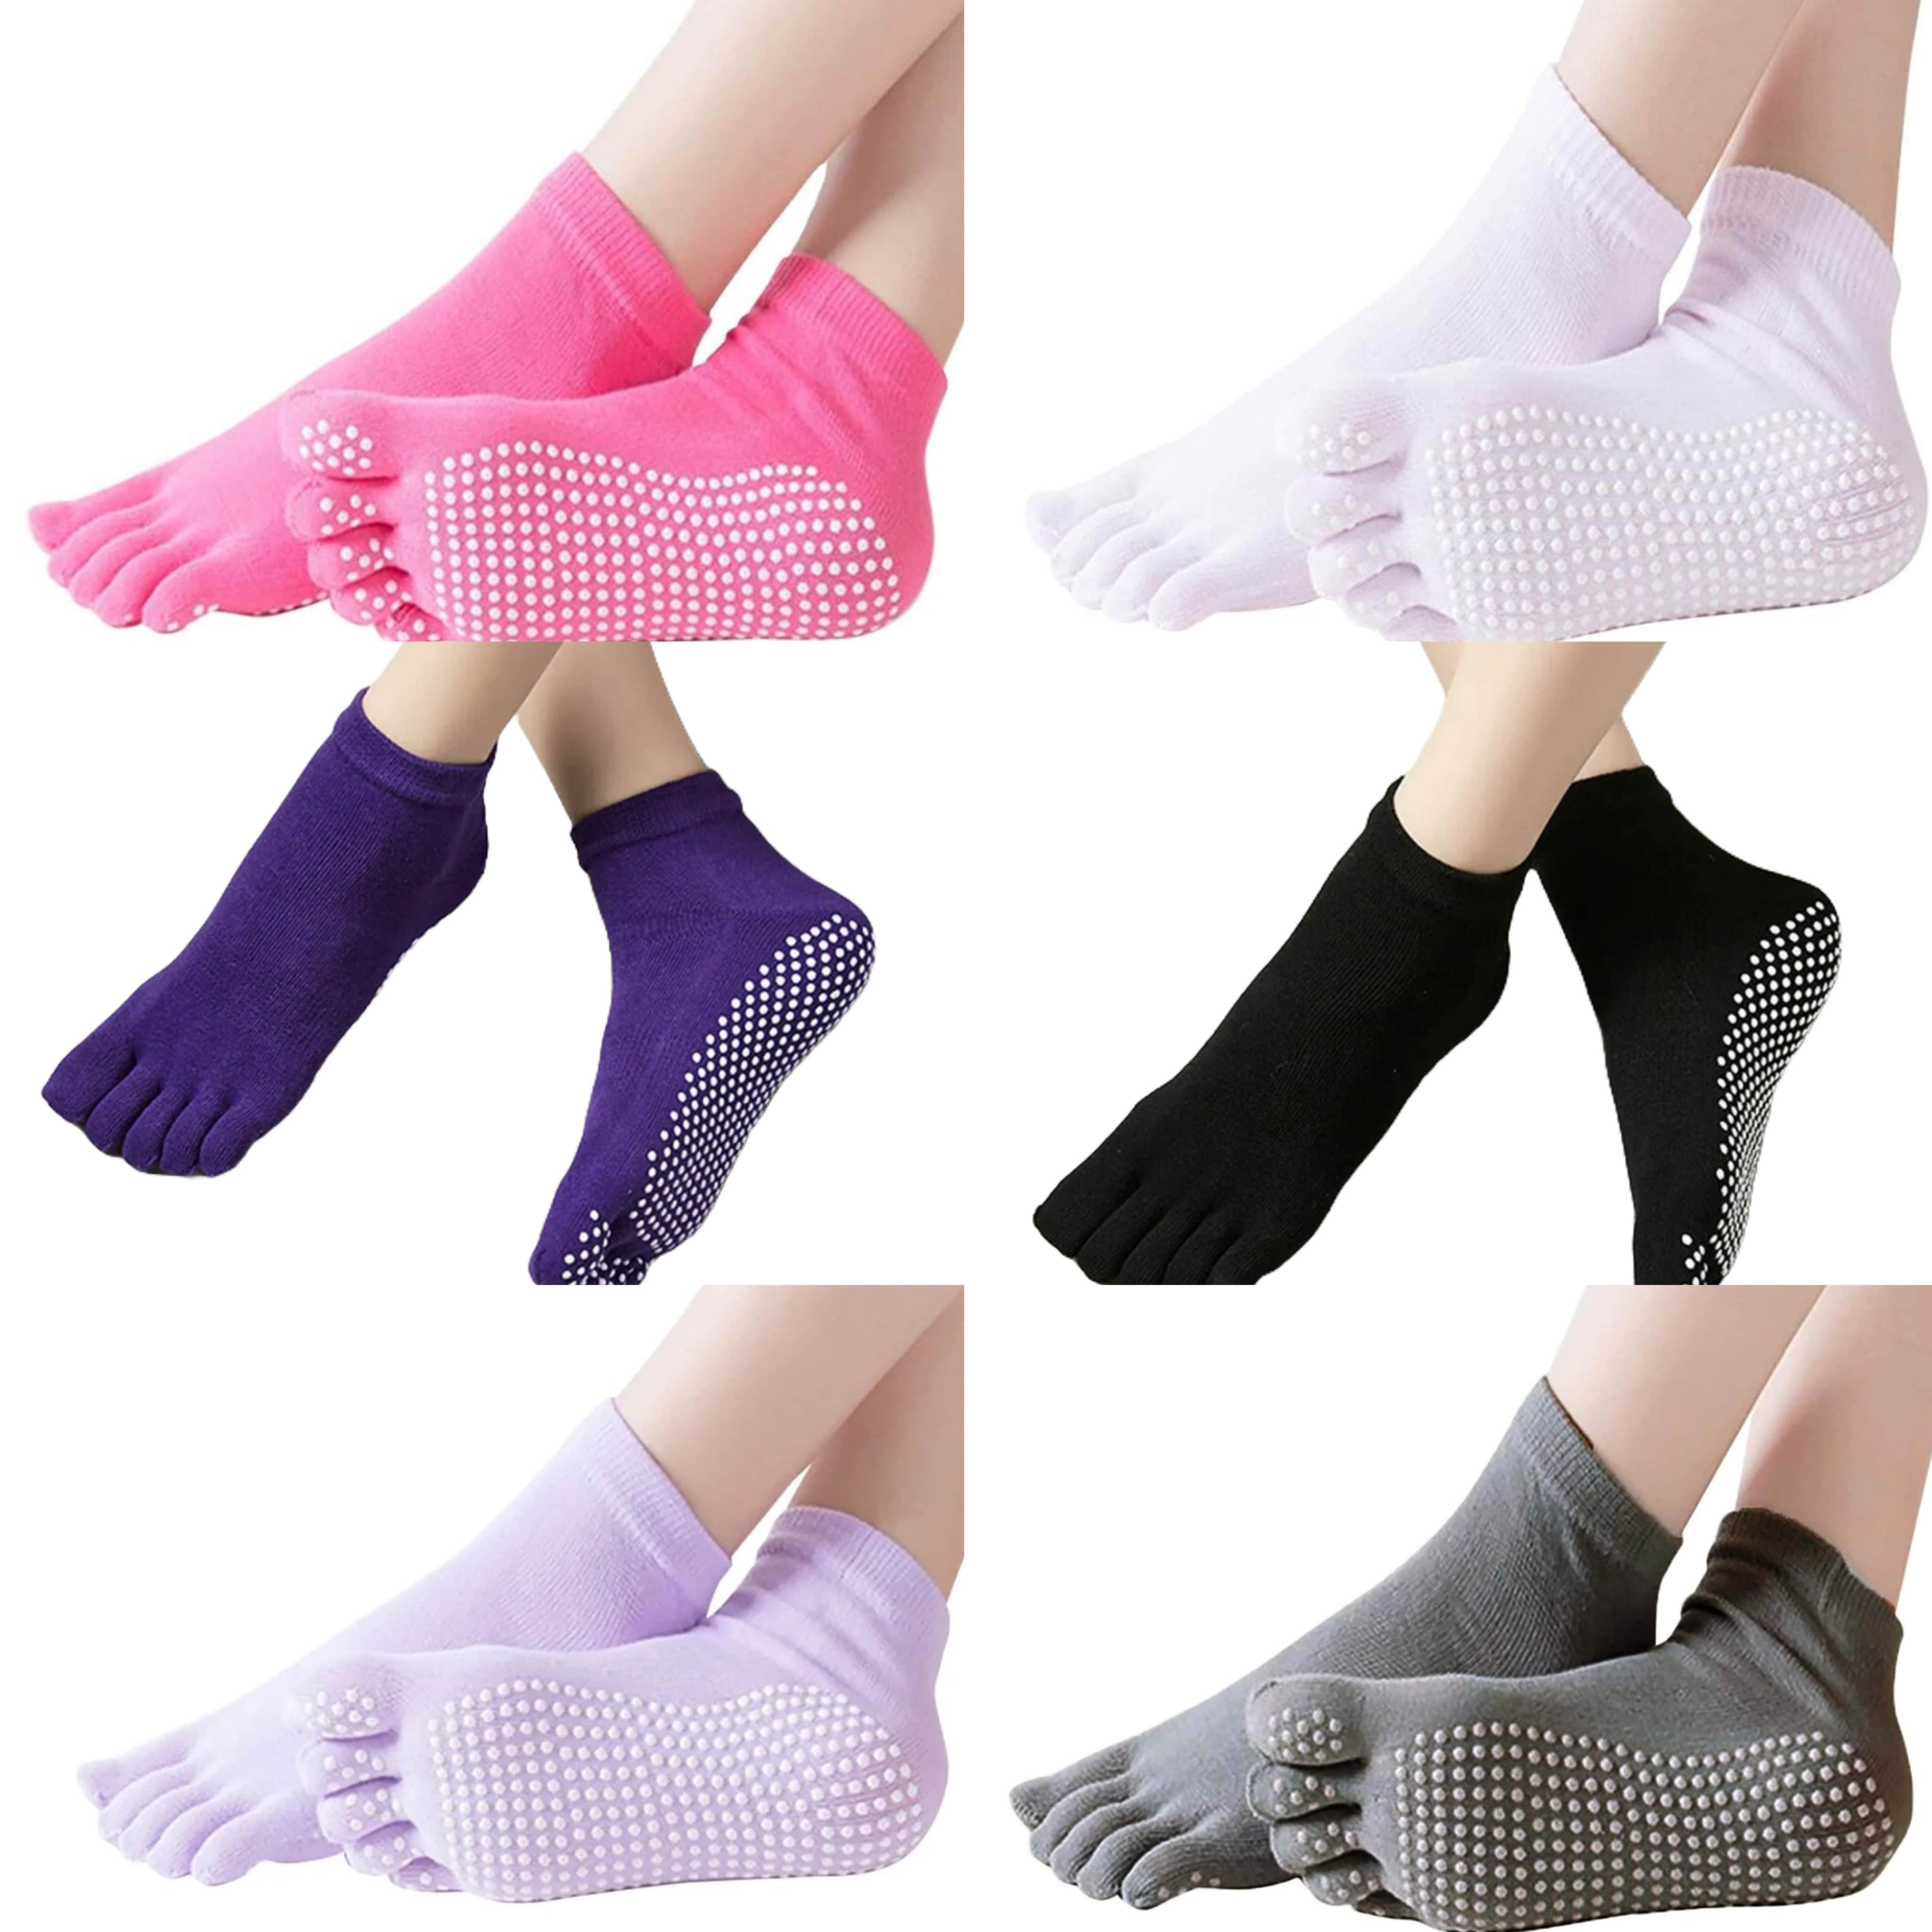 Solid Color Toe Socks (Adult Medium) six pack